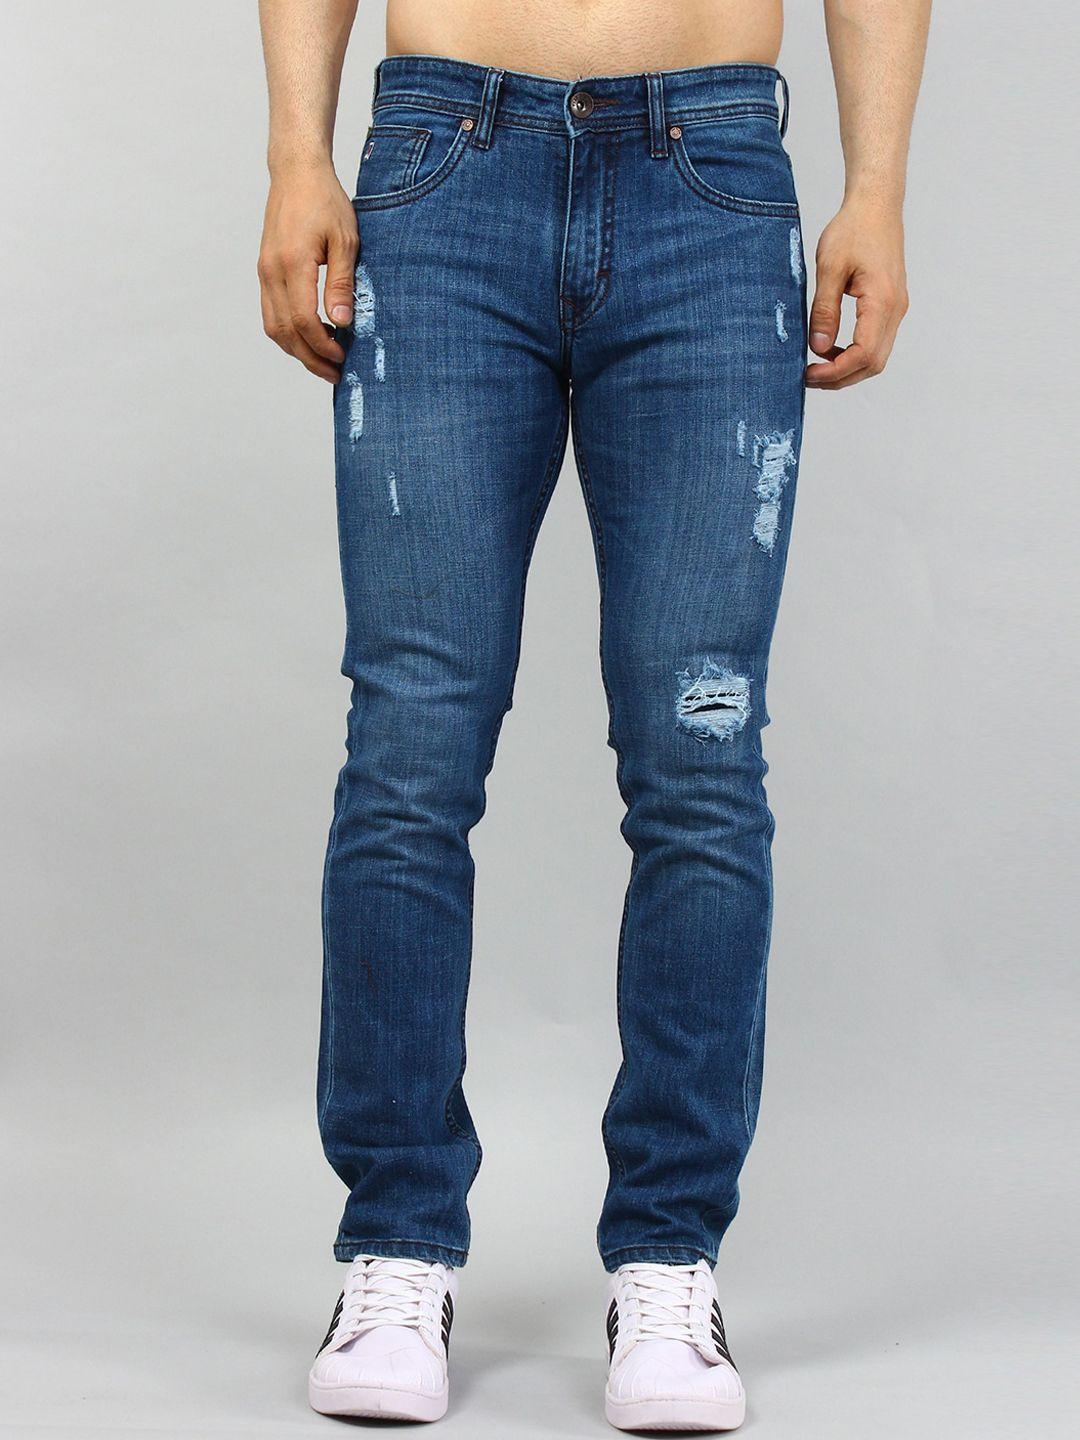 tim paris comfort mildly distressed light fade mid-rise regular fit stretchable jeans